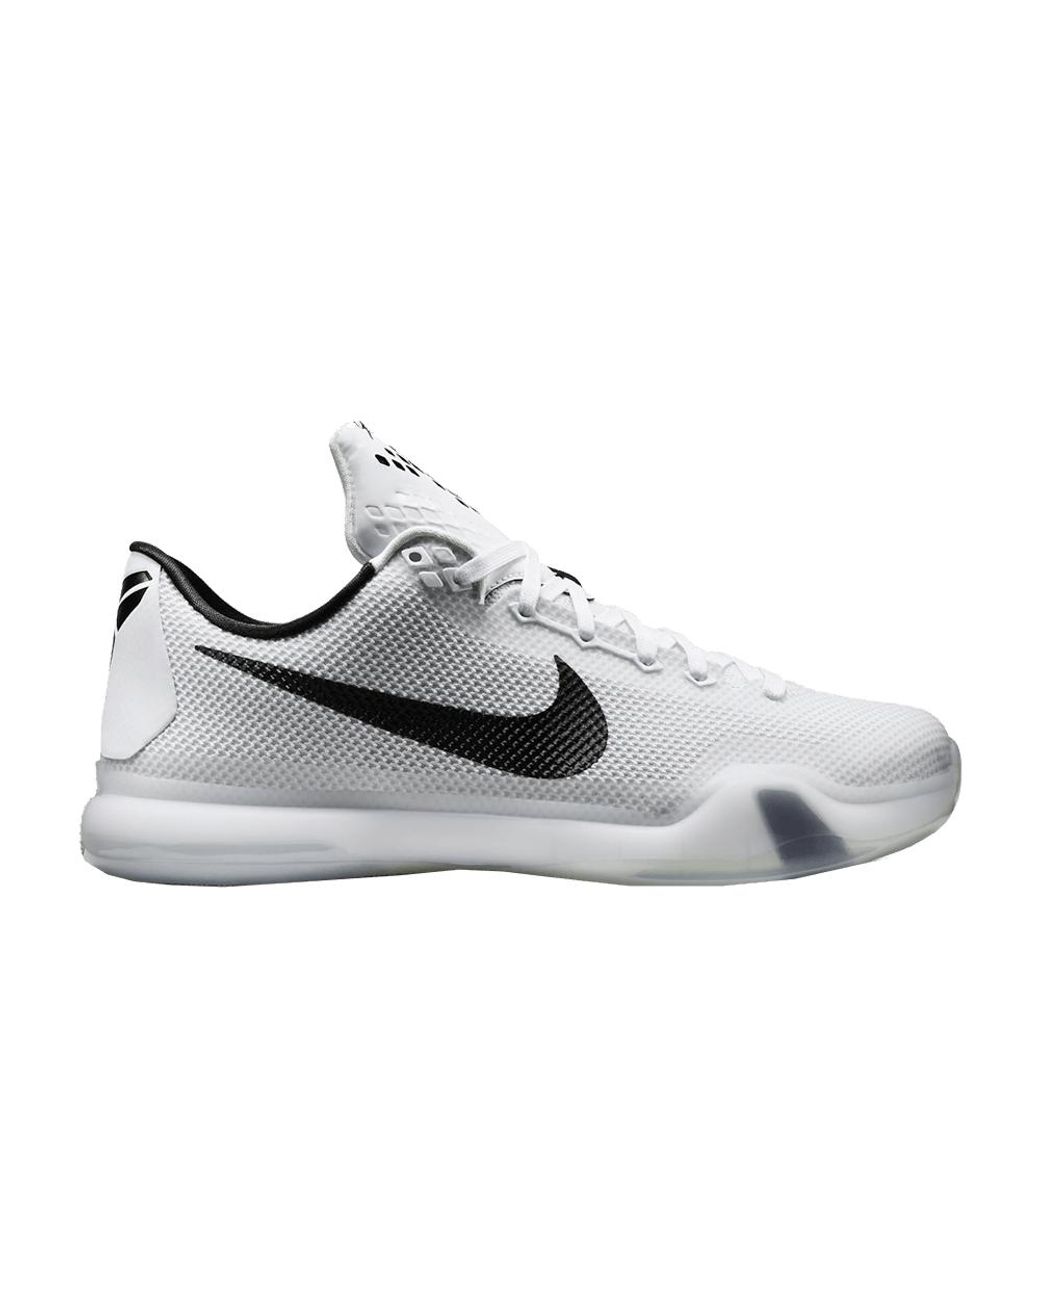 Nike Kobe 10 Fundamentals in White for Men - Save 57% - Lyst